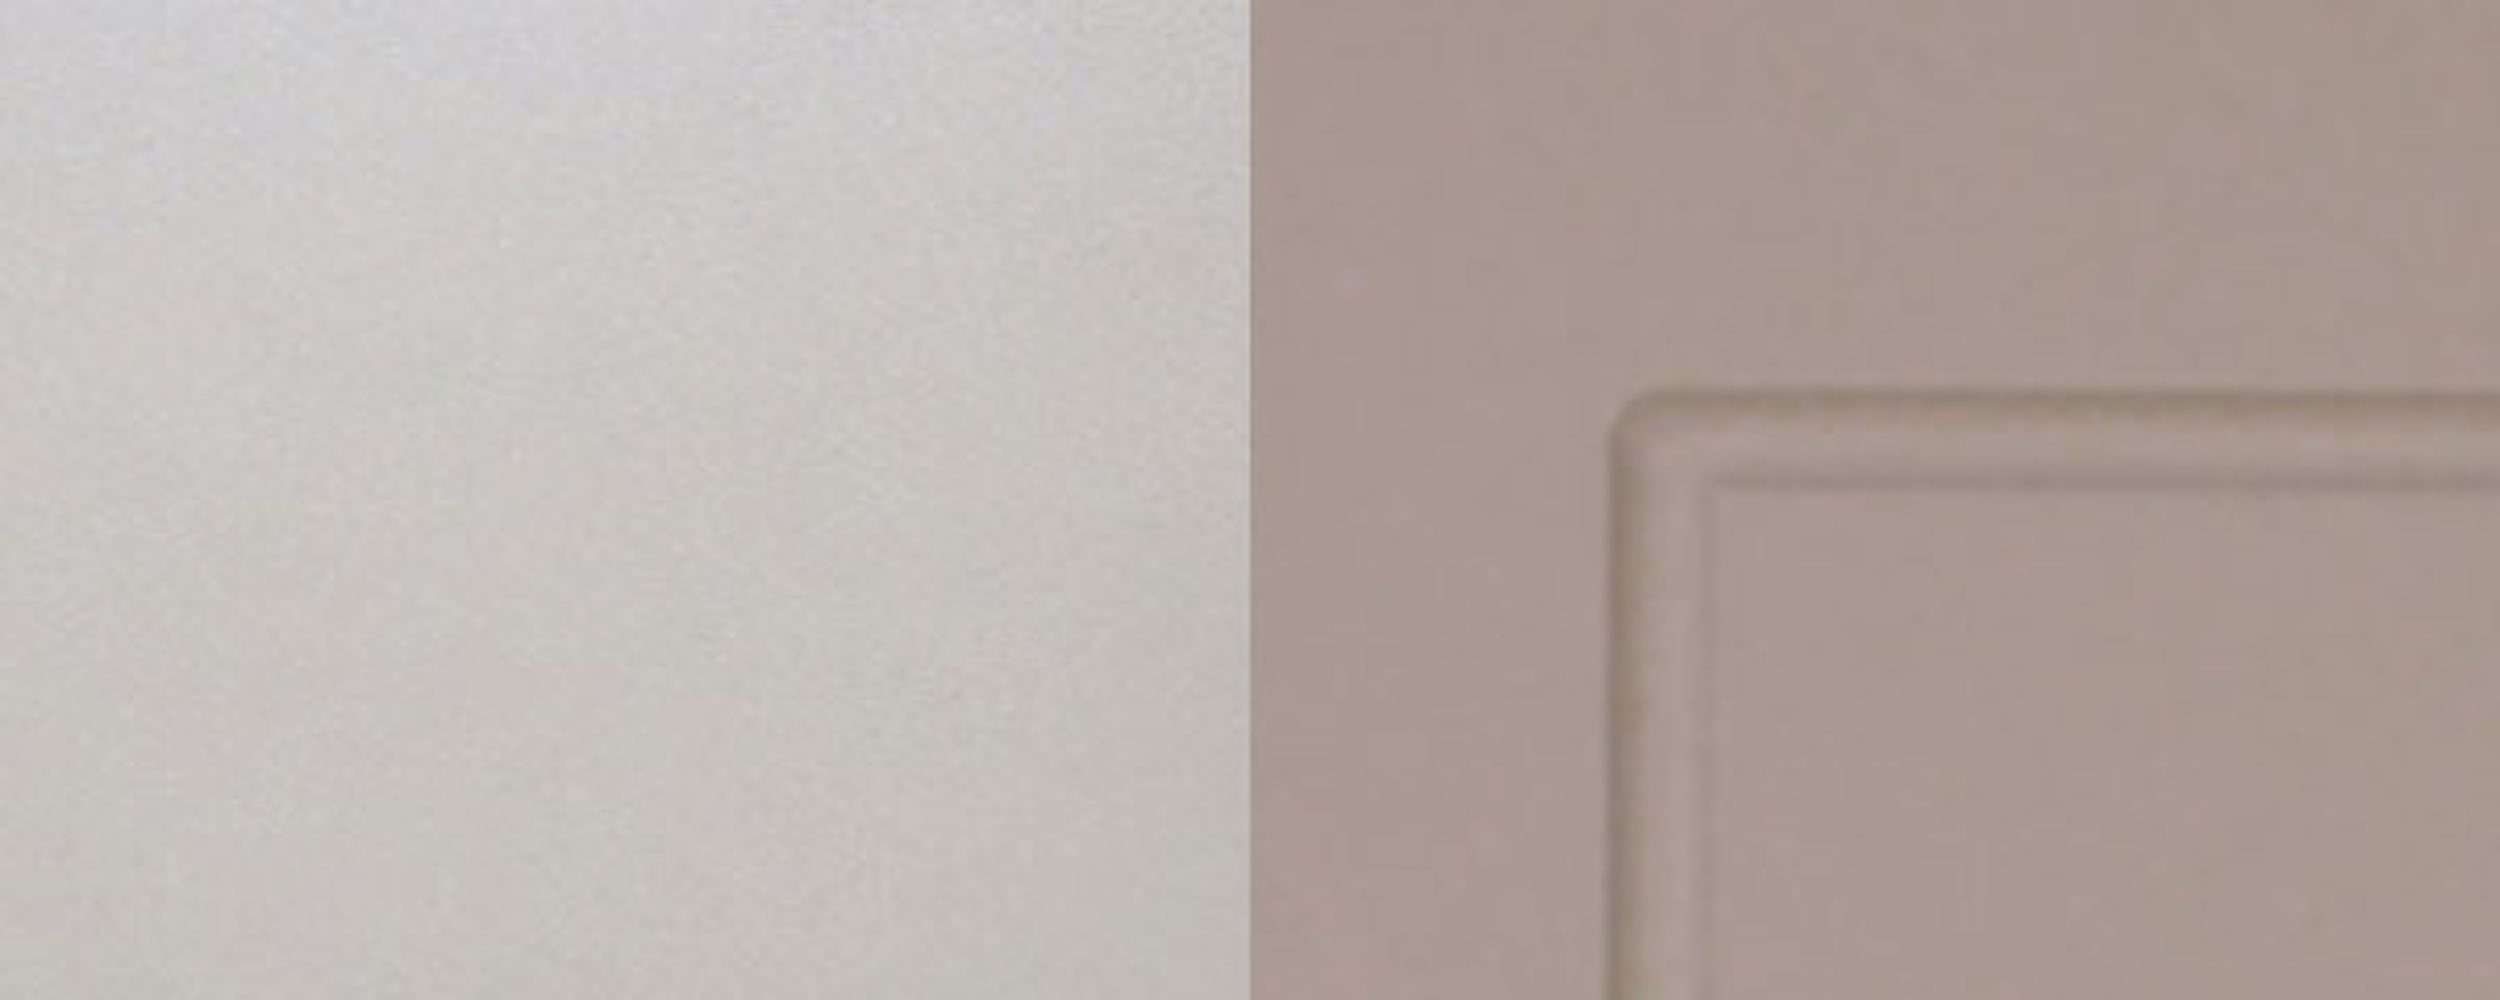 Feldmann-Wohnen Sockelblende Kvantum, beige Ausführung und Sockel-, matt wählbar Frontfarbe